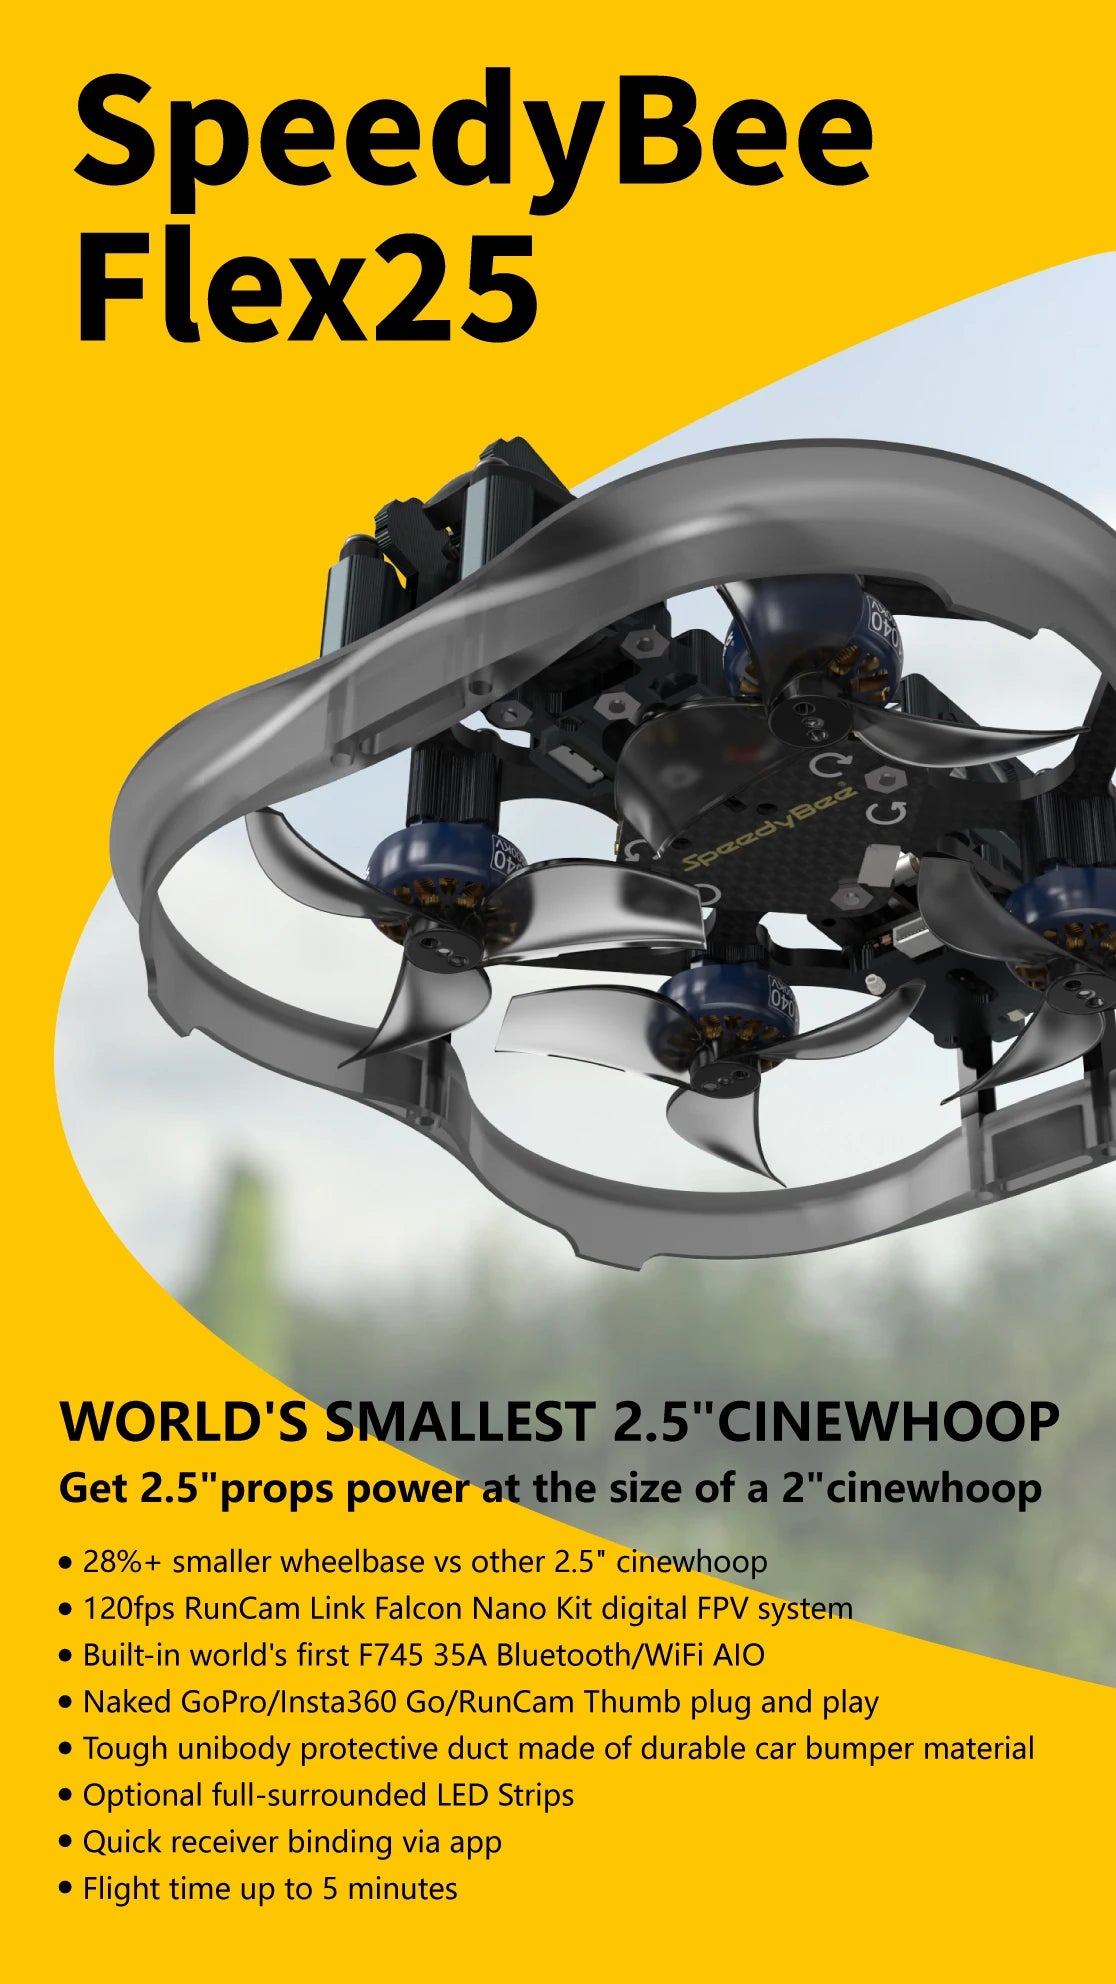 SpeedyBee F745 FreeStyle FPV Drone, SpeedyBee Flex25 WORLD'S SMALLEST 2.5"CINEW